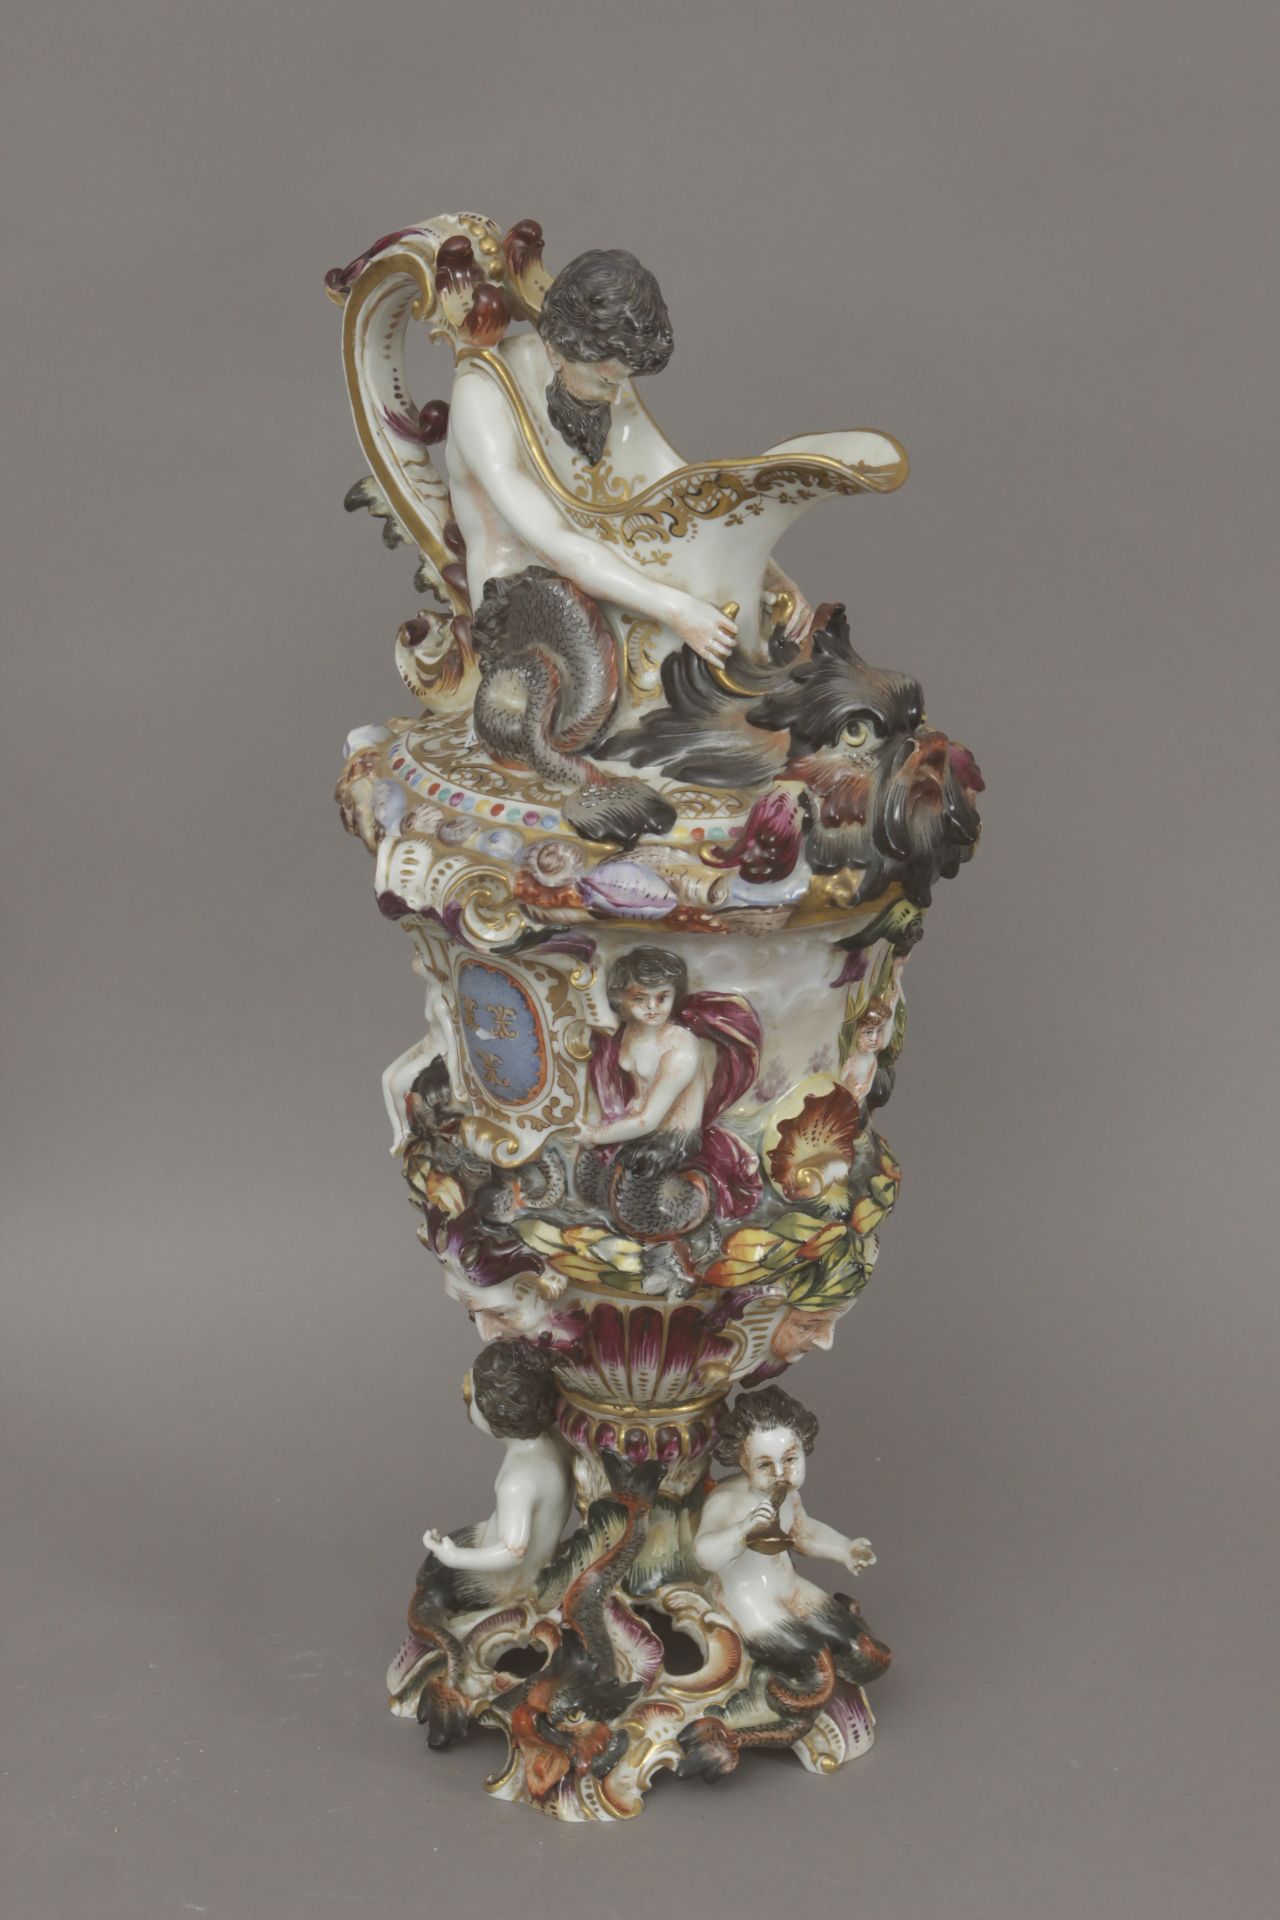 A 19th century Italian pitcher in Capodimonte porcelain